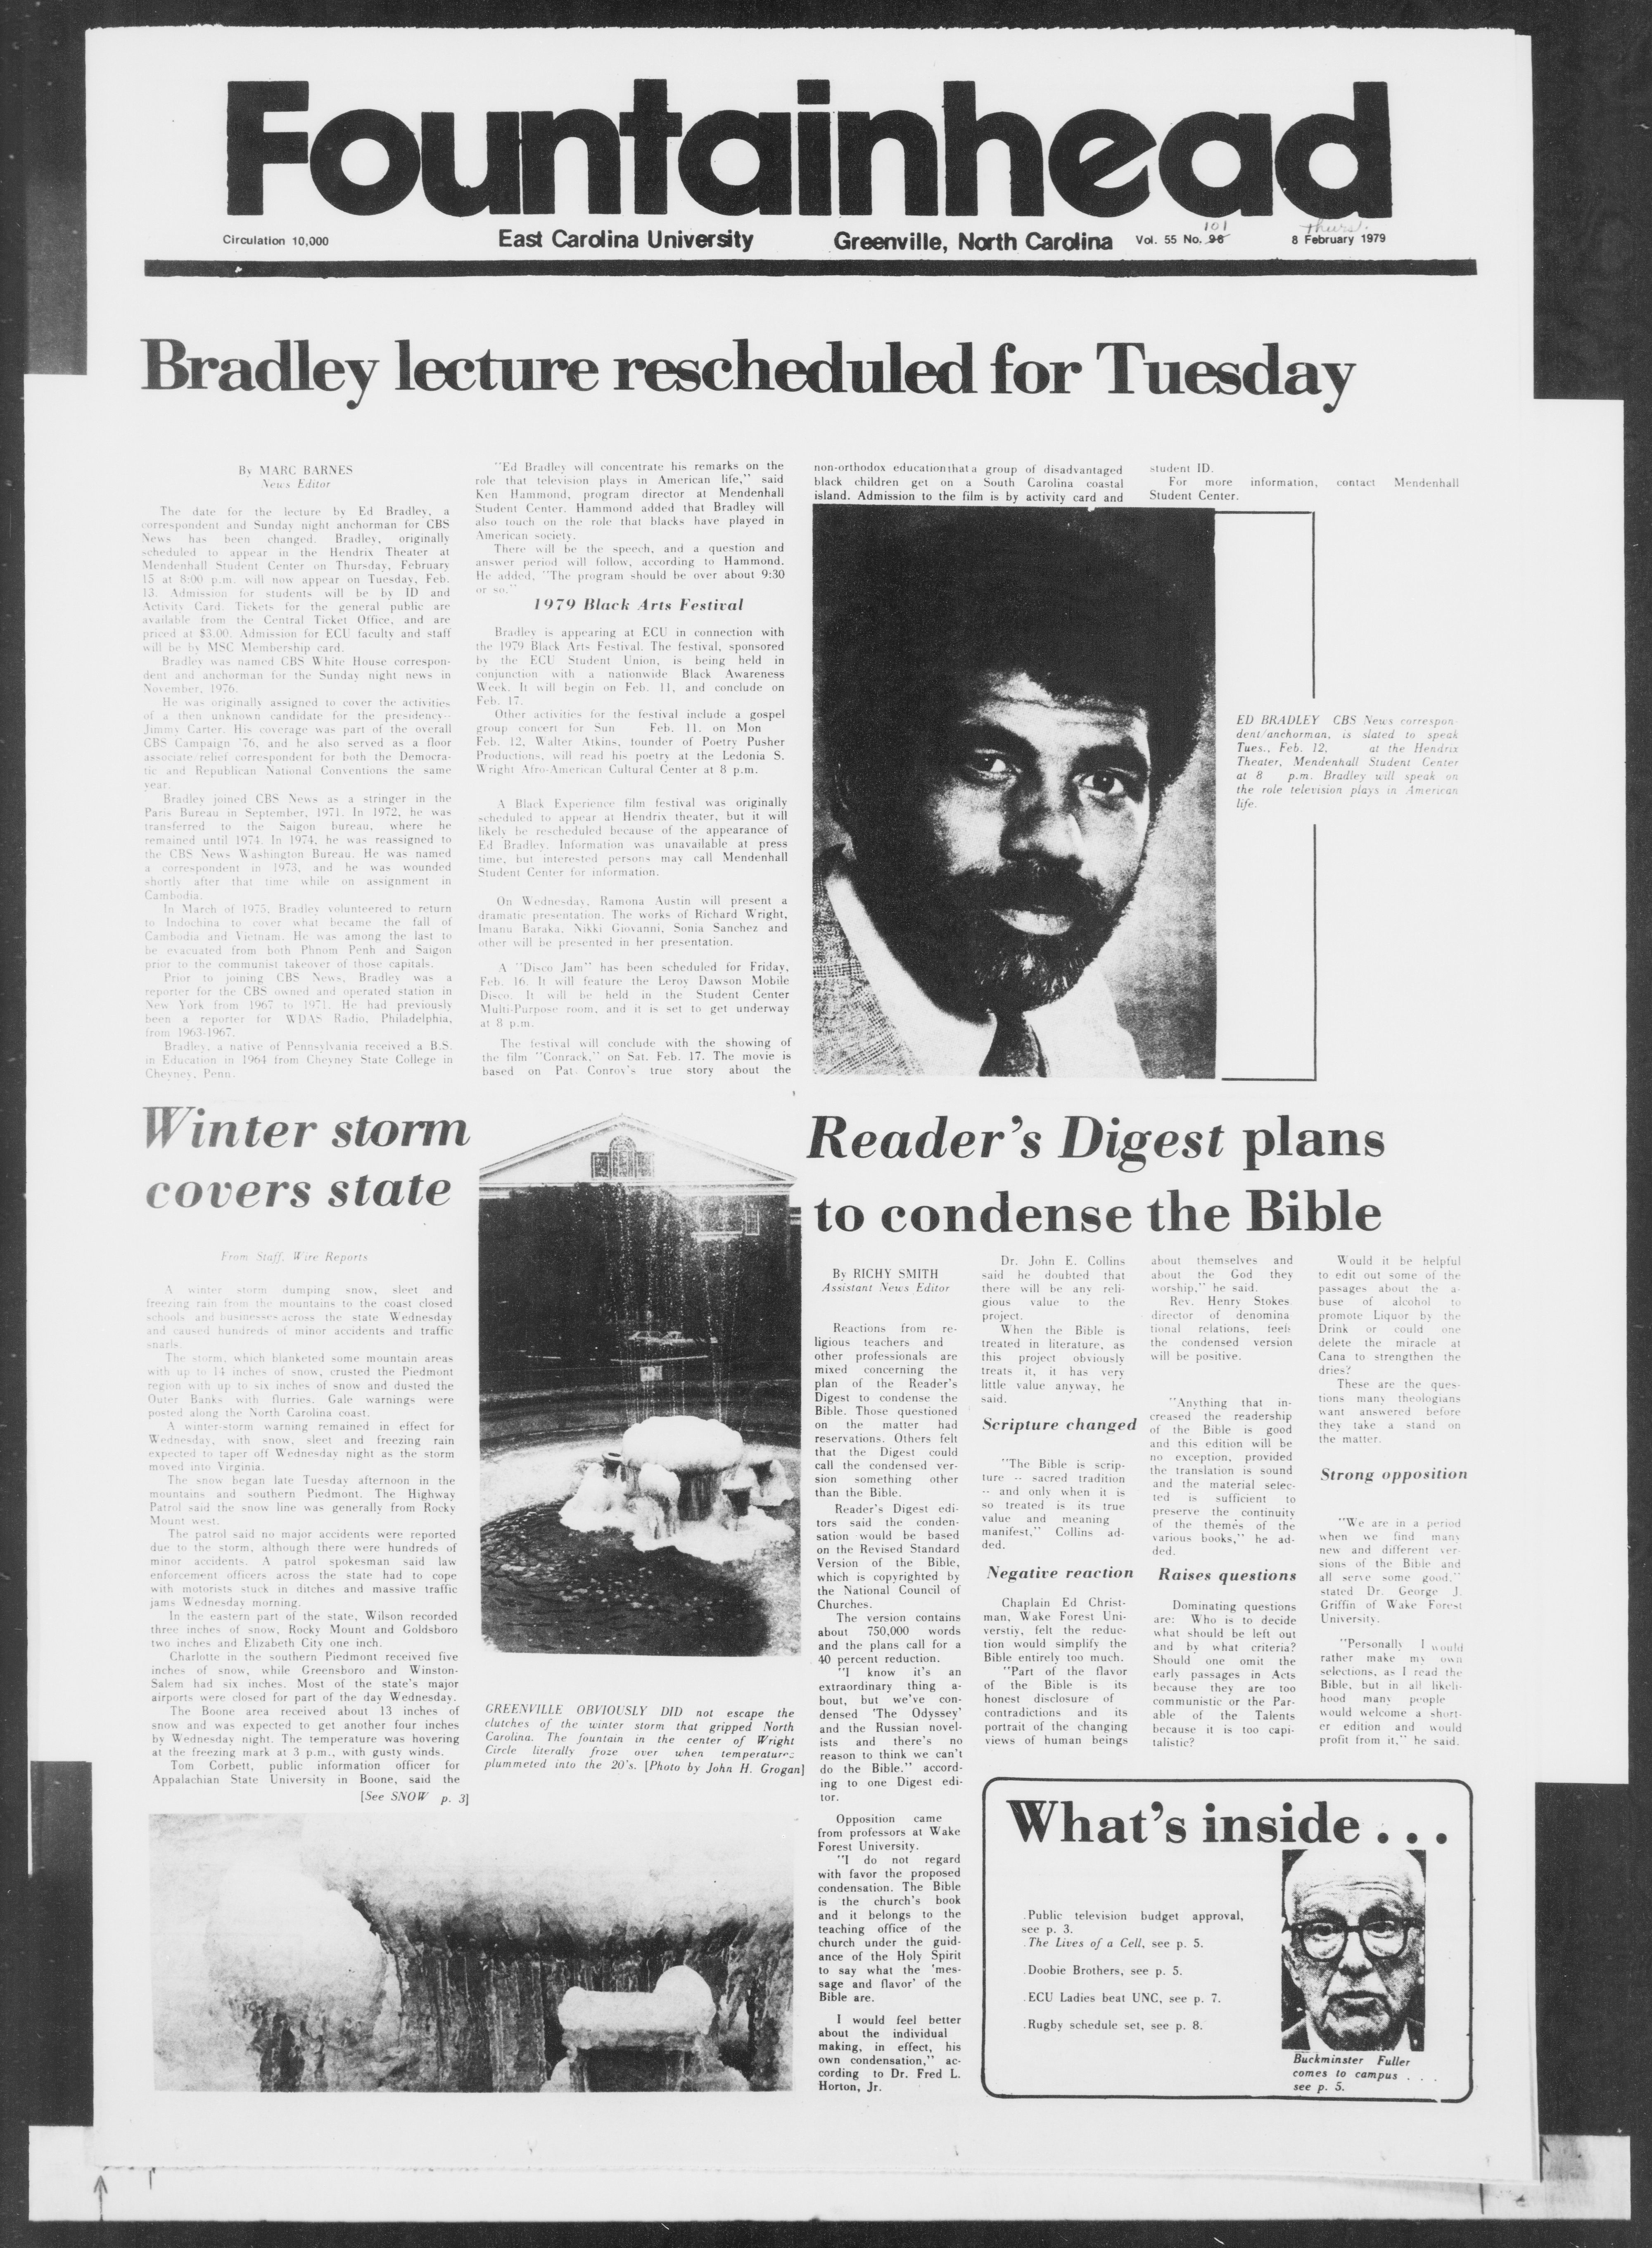 Fountainhead, February 8, 1979